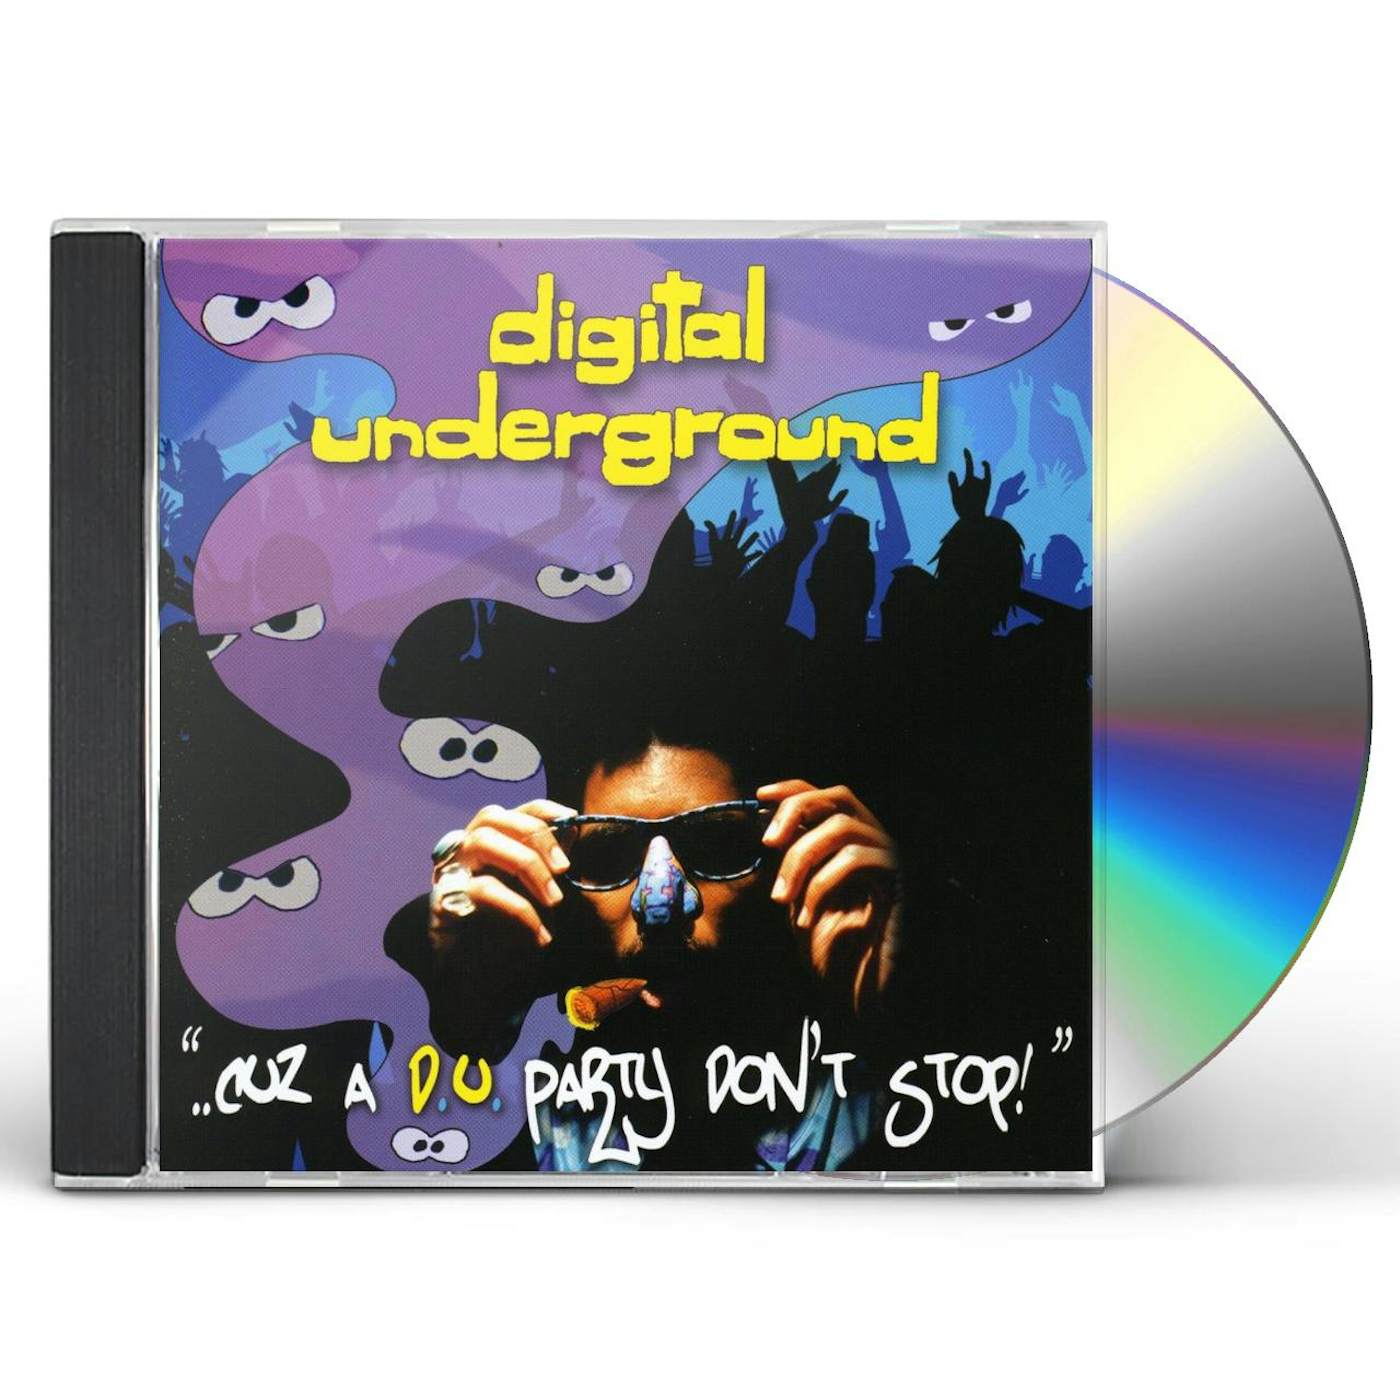 Digital Underground CUZ A D.U. PARTY DON'T STOP CD